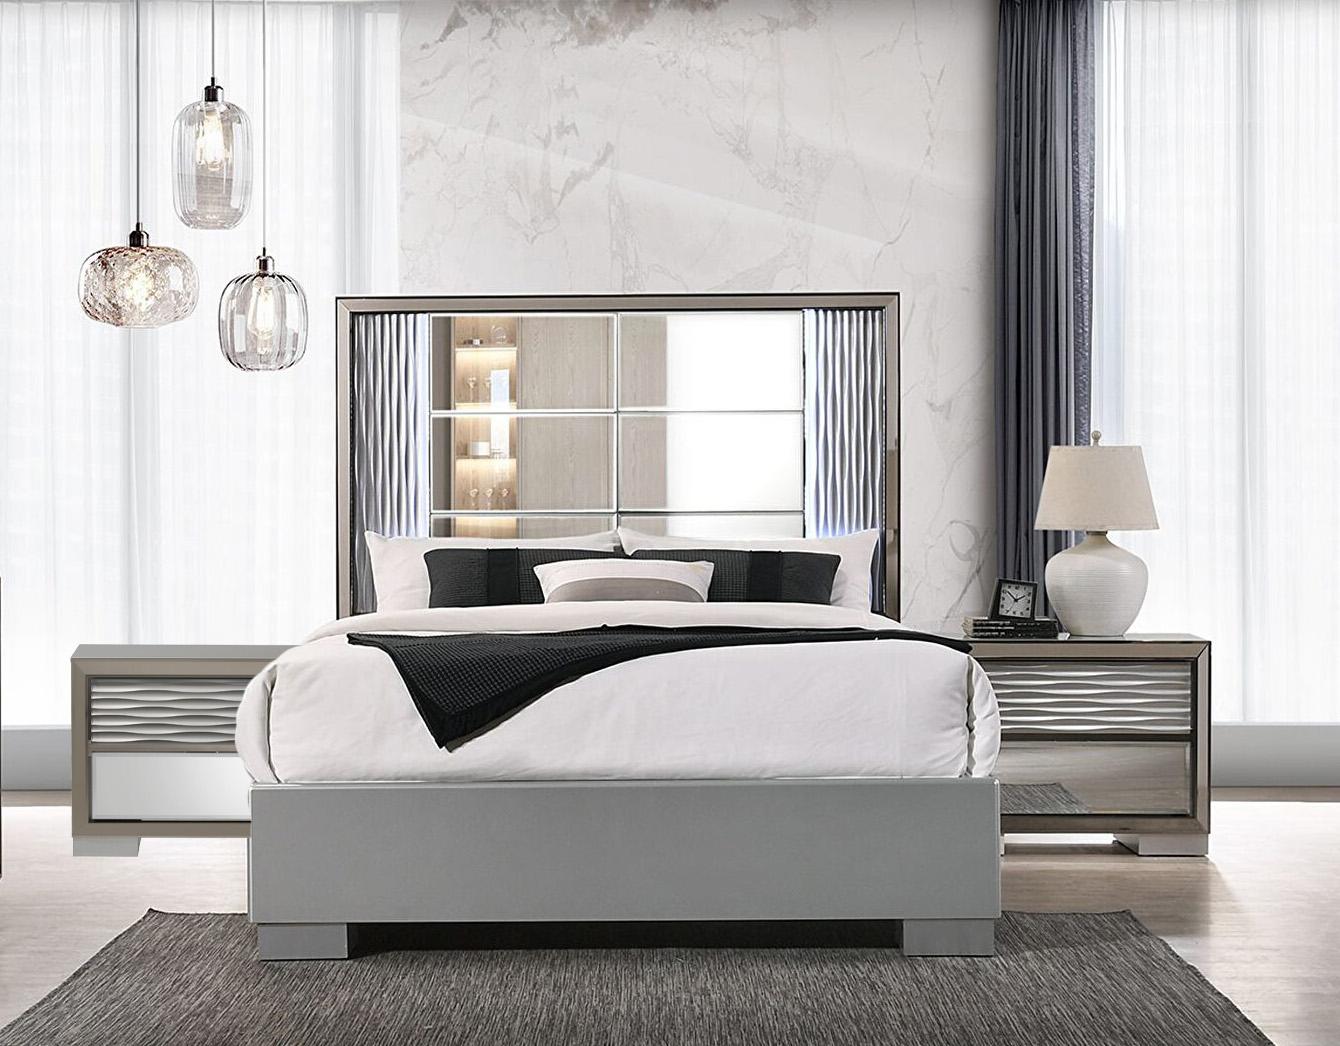 

    
SKYLINE Mirrored Panels Glam Style King Bedroom Set 3Pcs w/LED Global US
